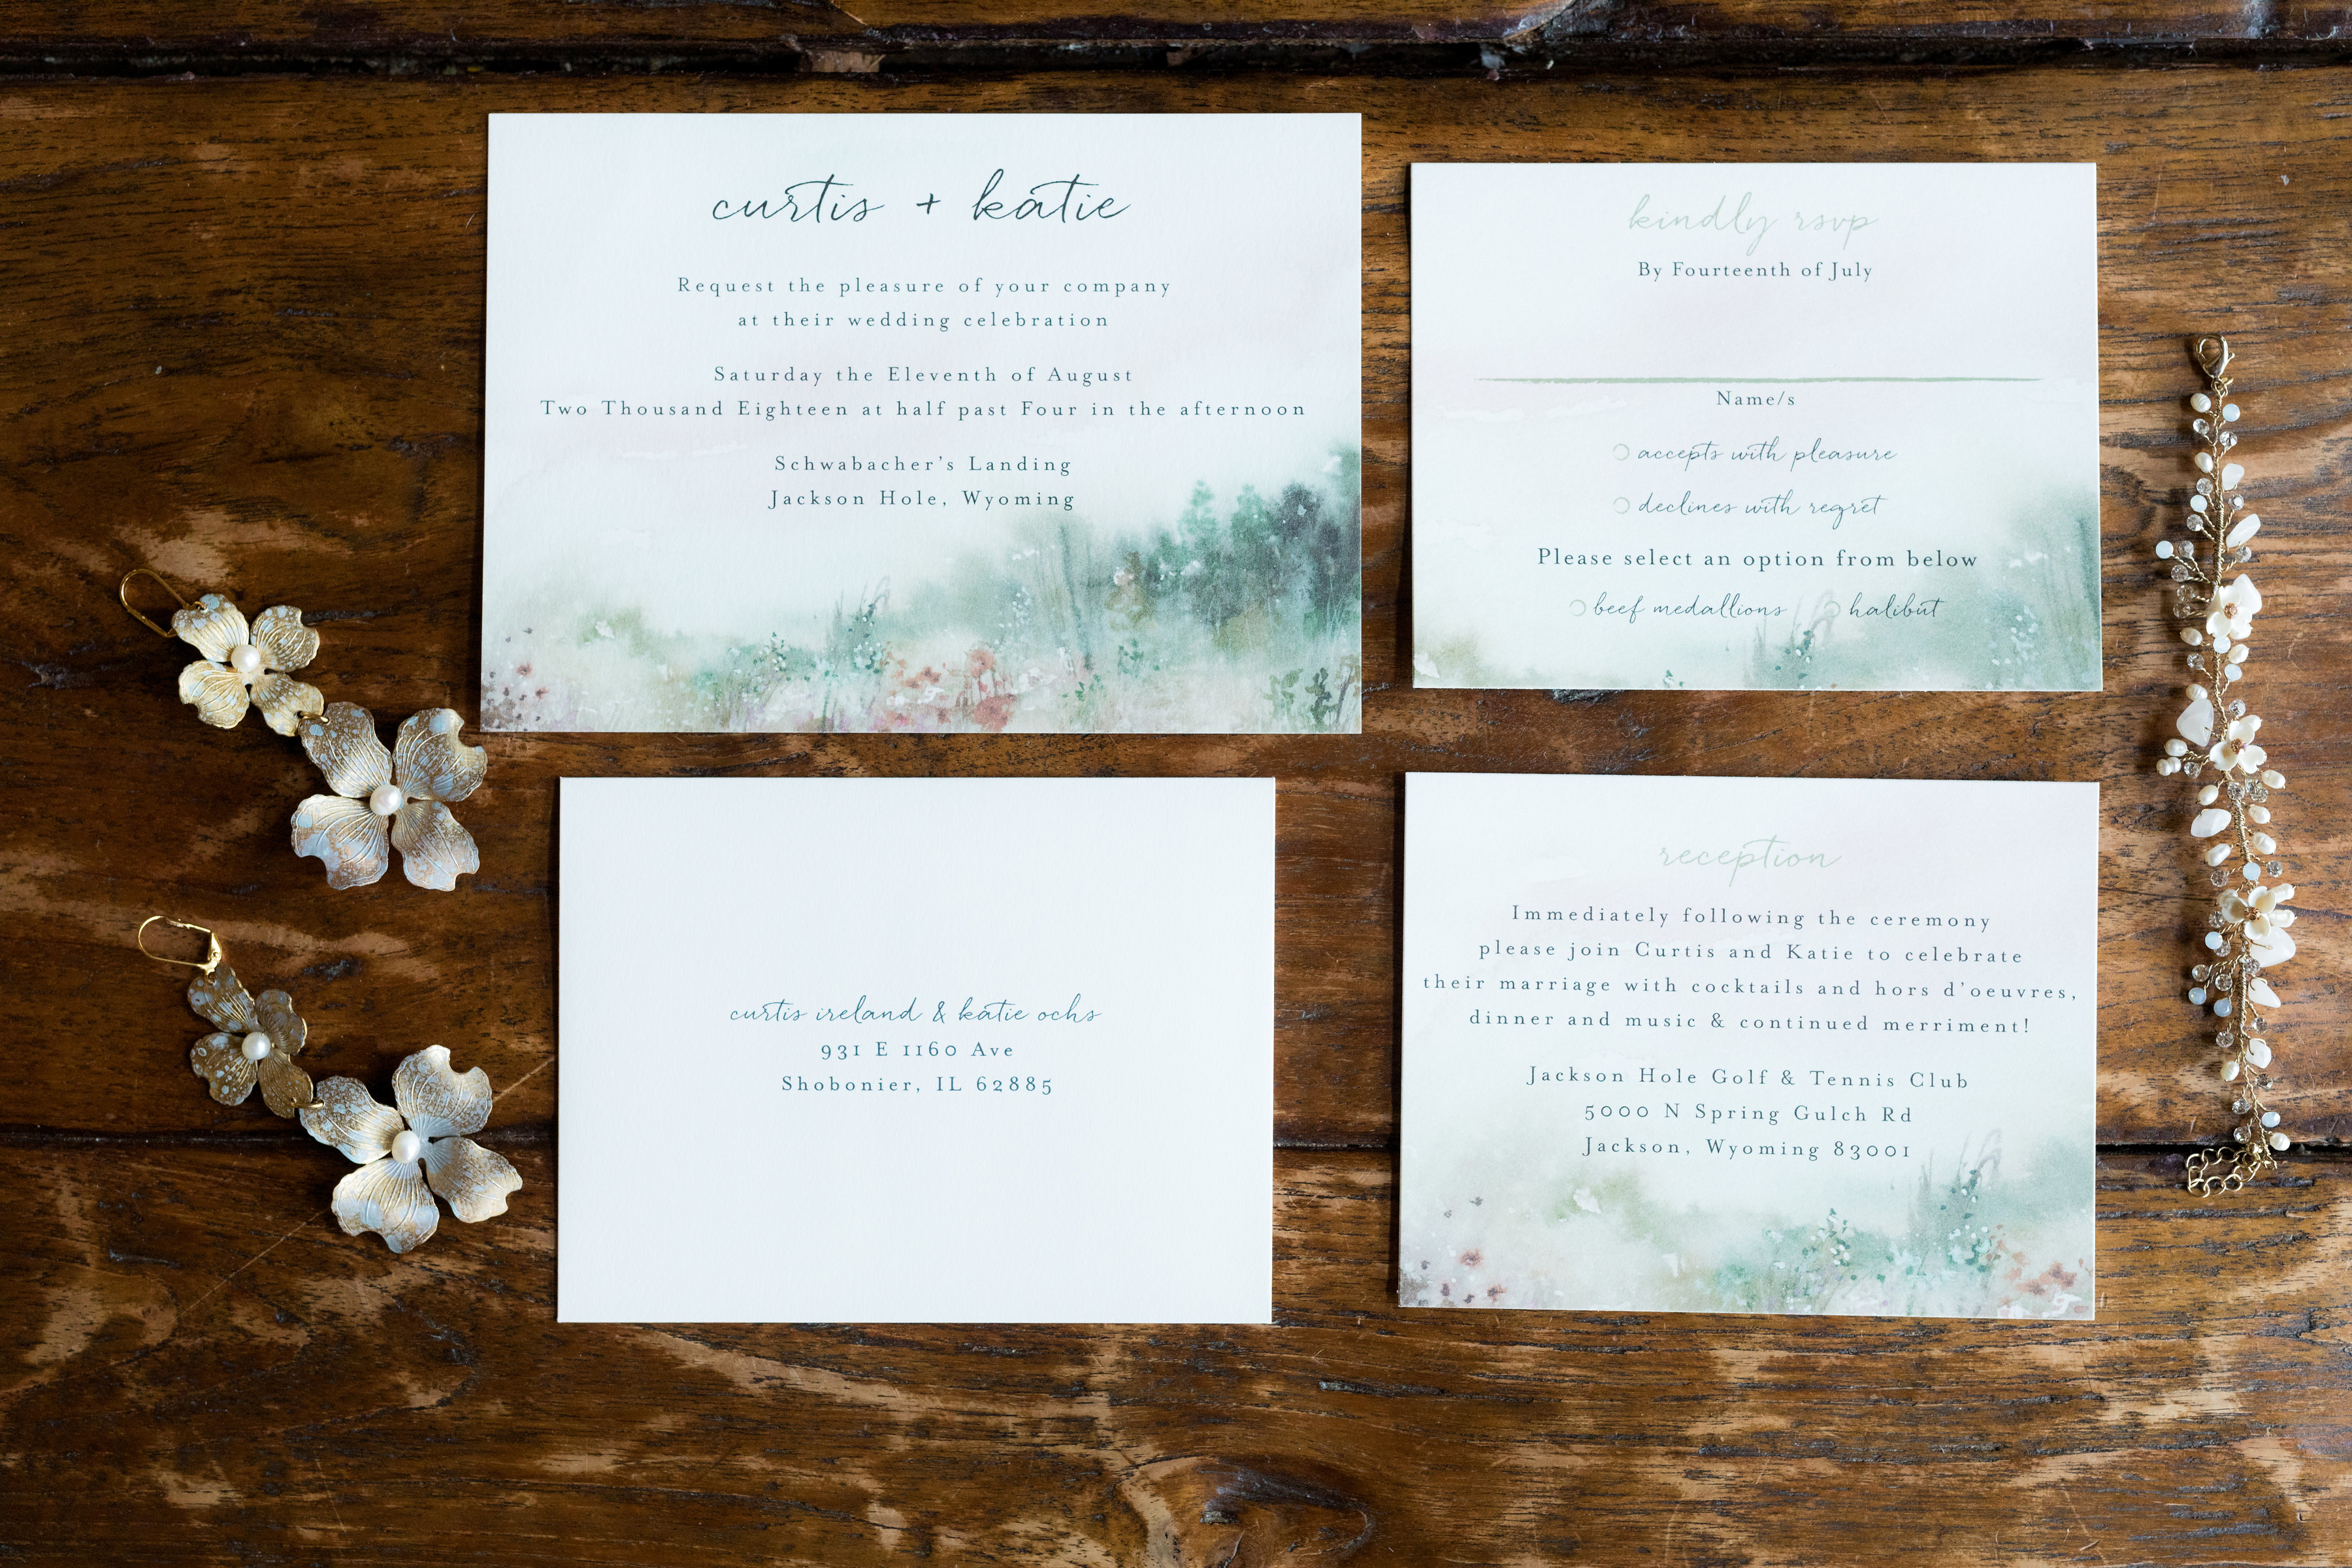 jackson wyoming wedding invitations